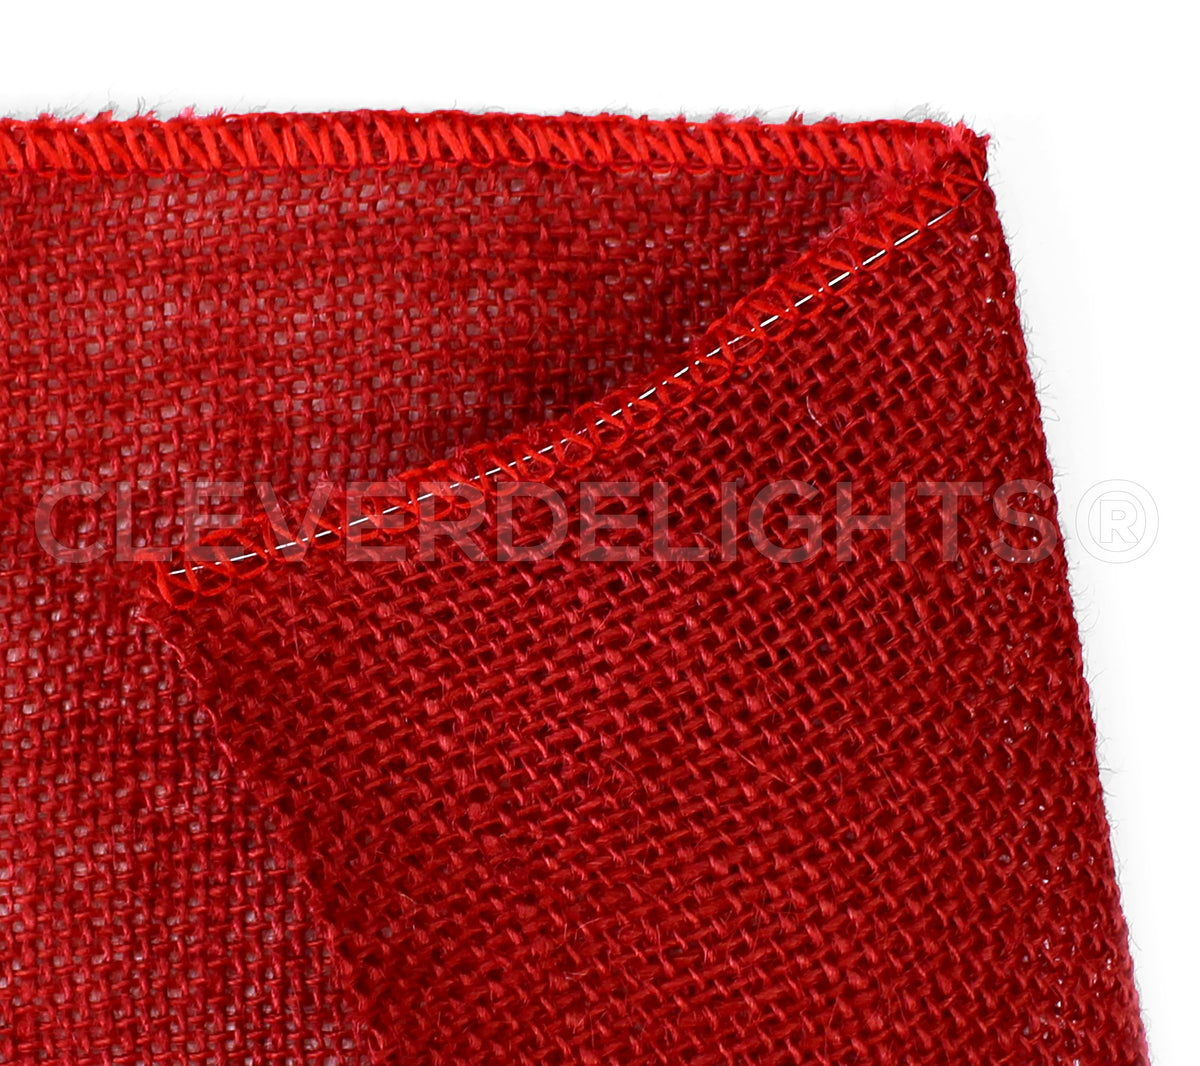 6 Red Burlap Roll - 10 Yards - Finished Edge - Jute Burlap Fabric 6 Inch